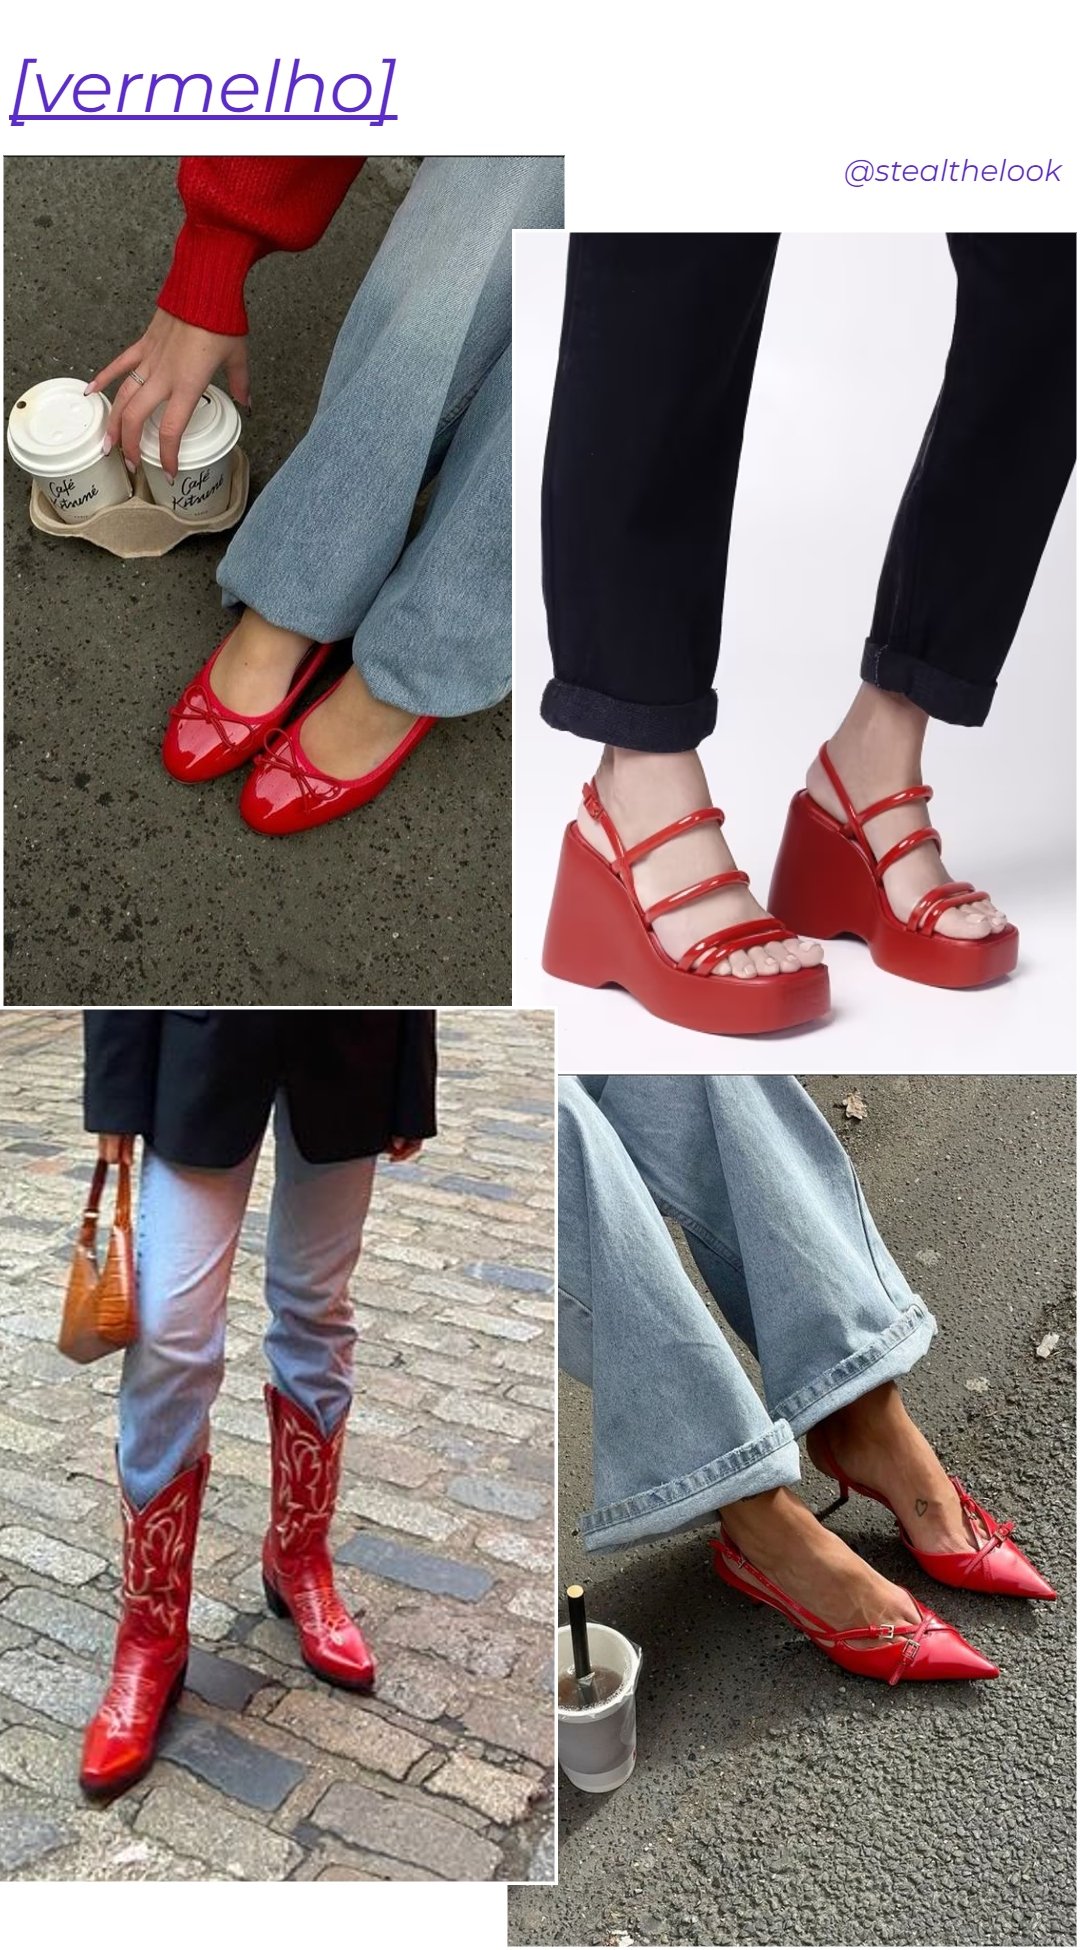 Vermelho - sapato - cores de sapato - tendência - street style - https://stealthelook.com.br